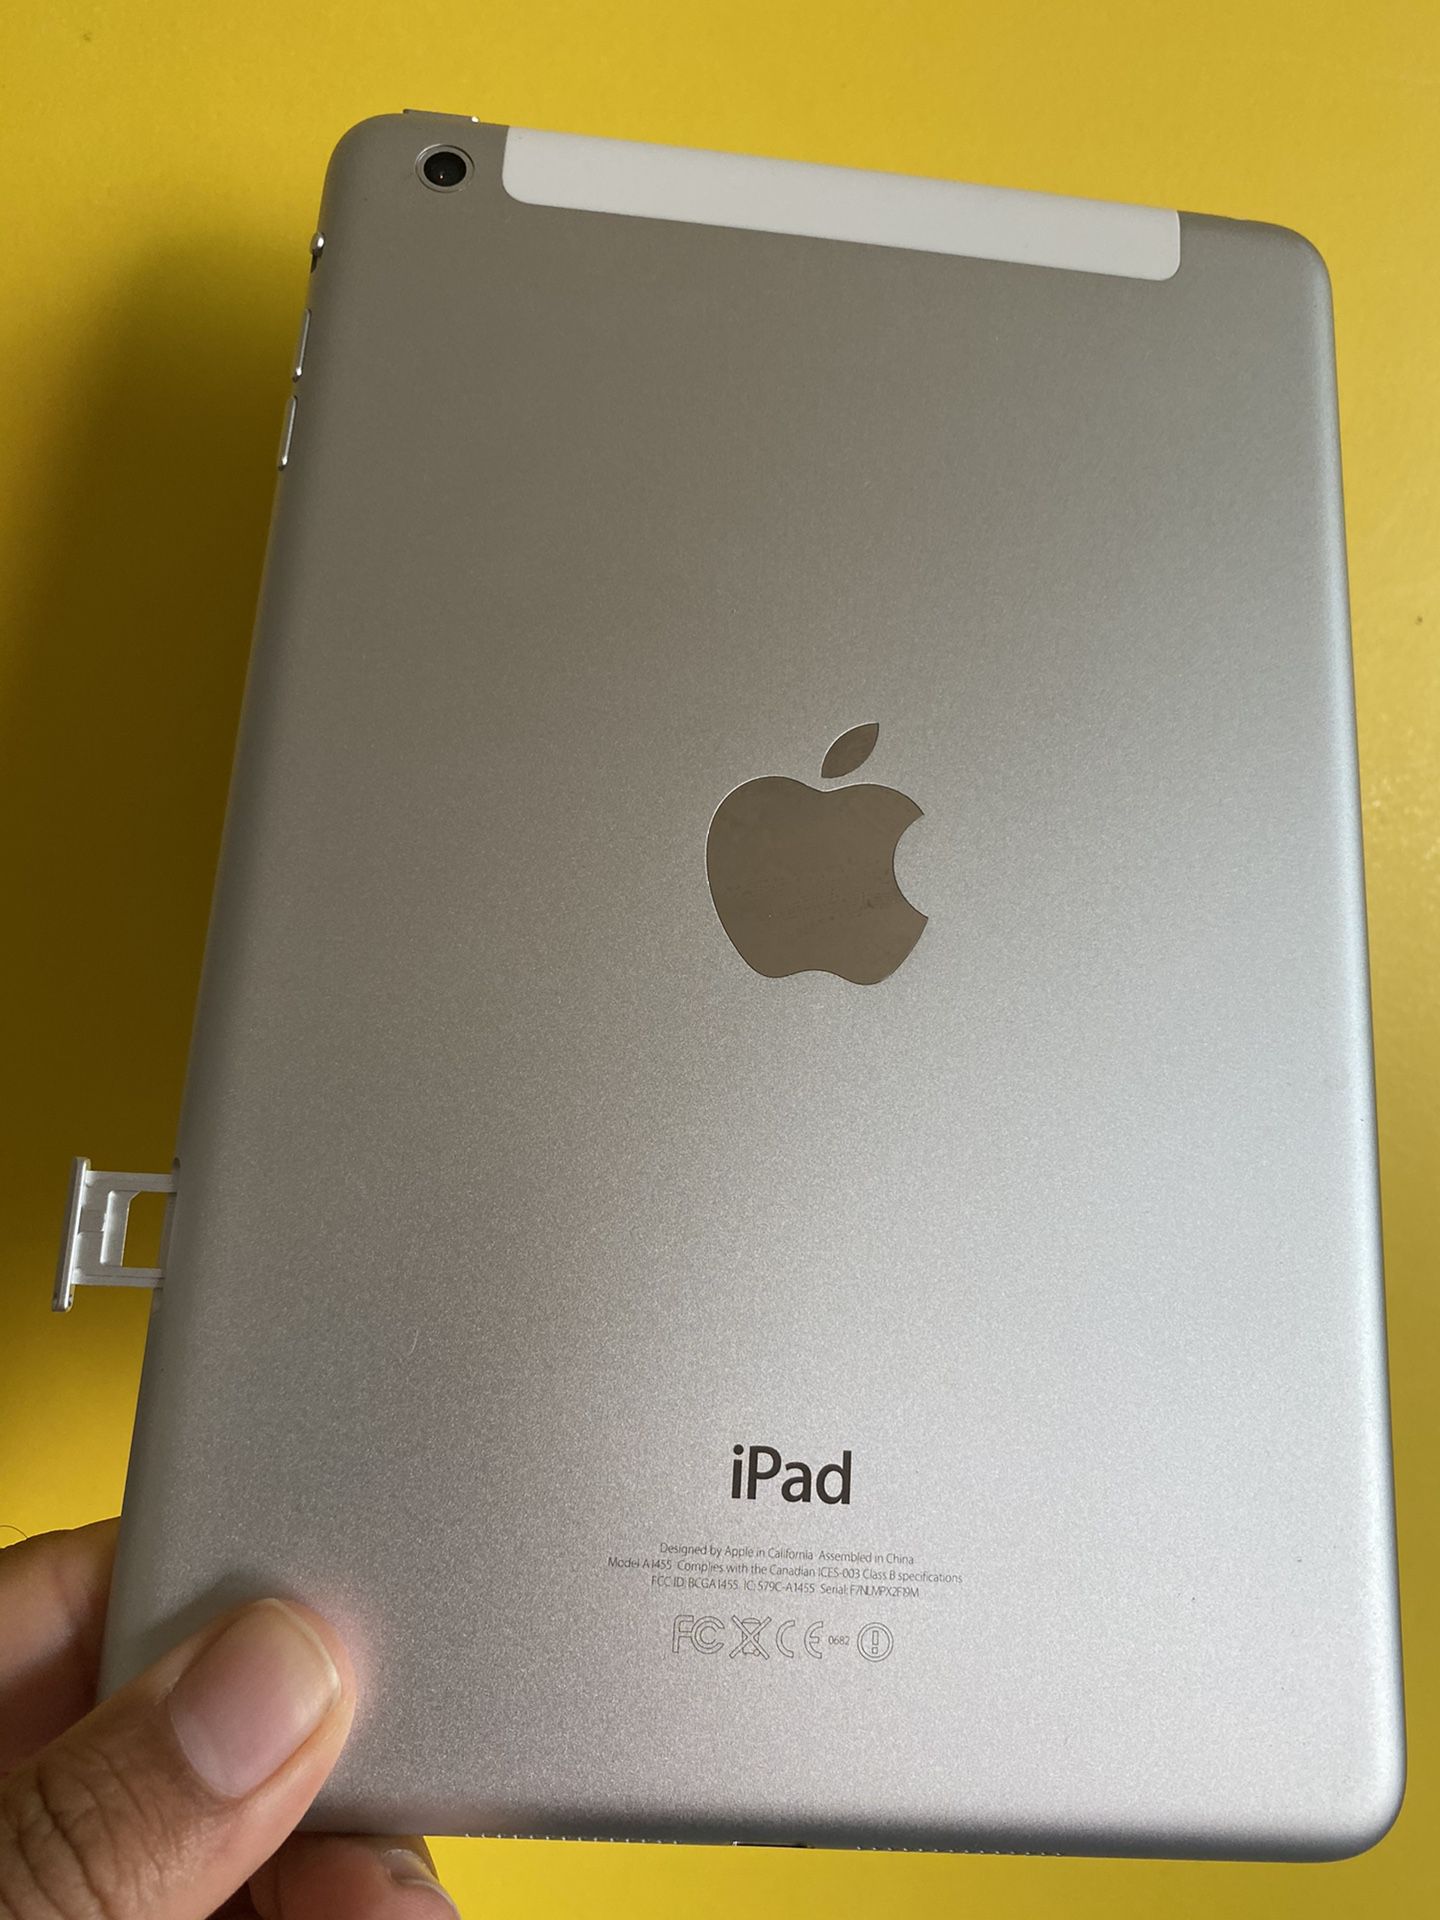 Apple iPad Mini (7.9” HD Display / 2 Camera) 16GB WiFi + Cellular (LTE/Unlocked) with Complete Accessories